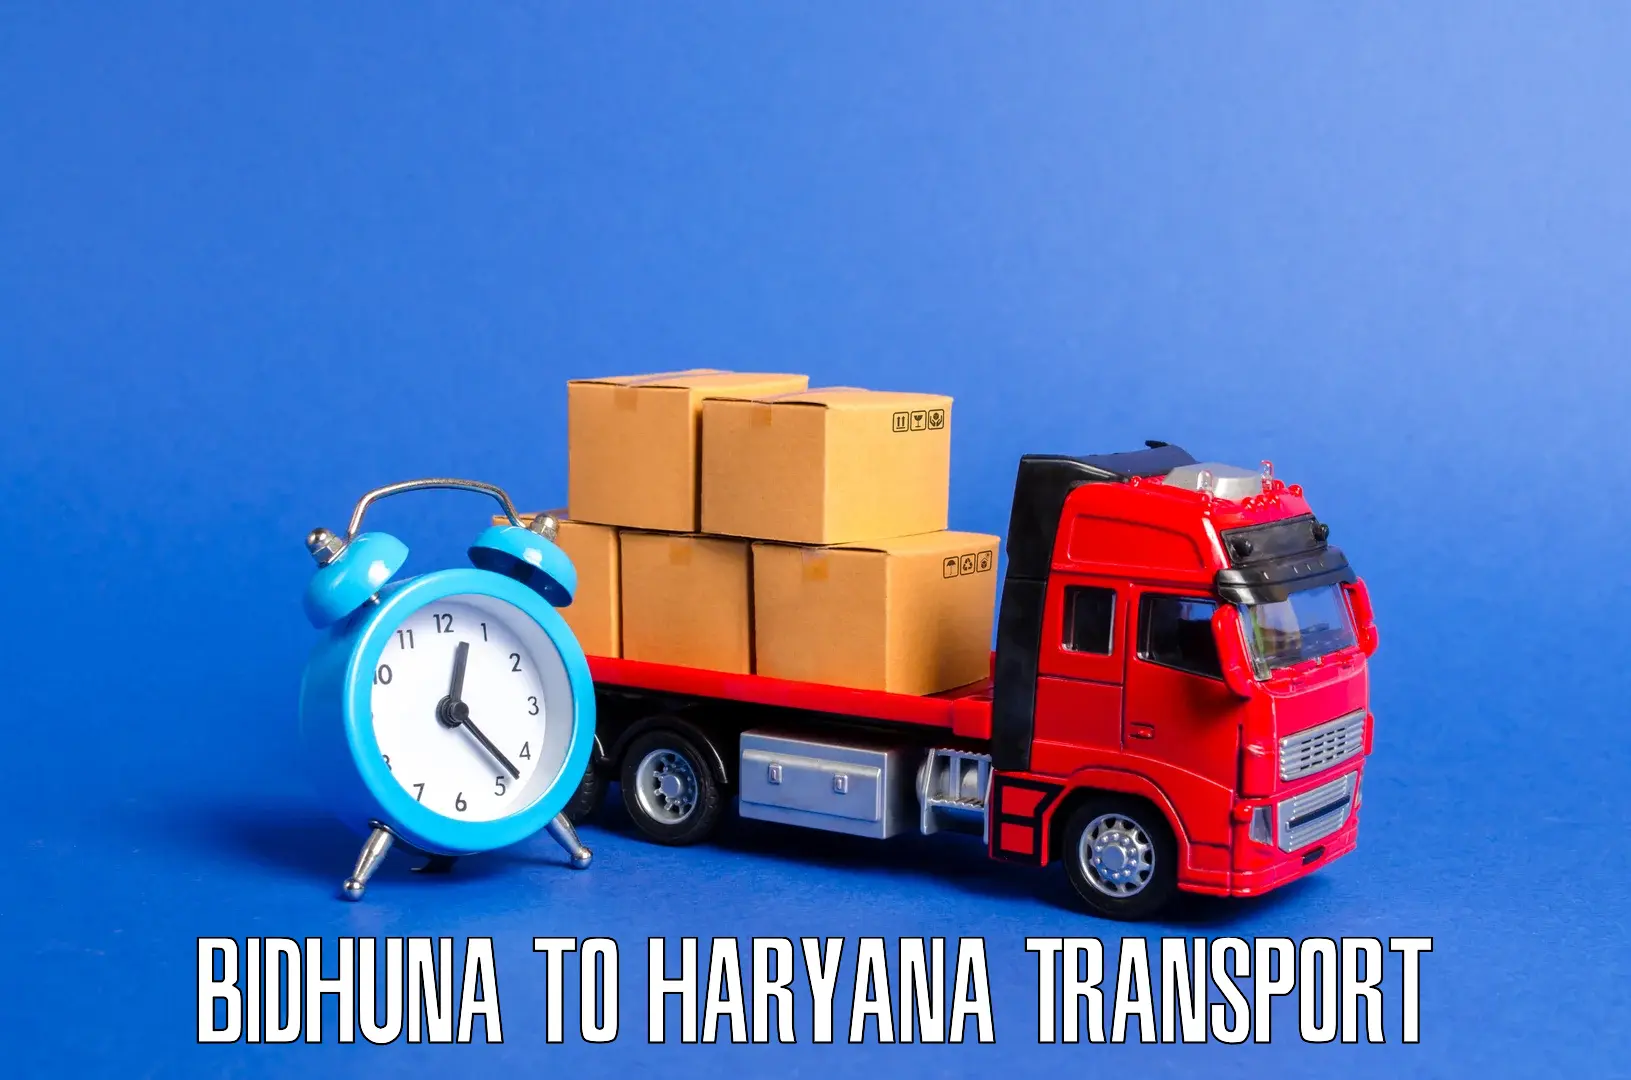 Delivery service in Bidhuna to Kurukshetra